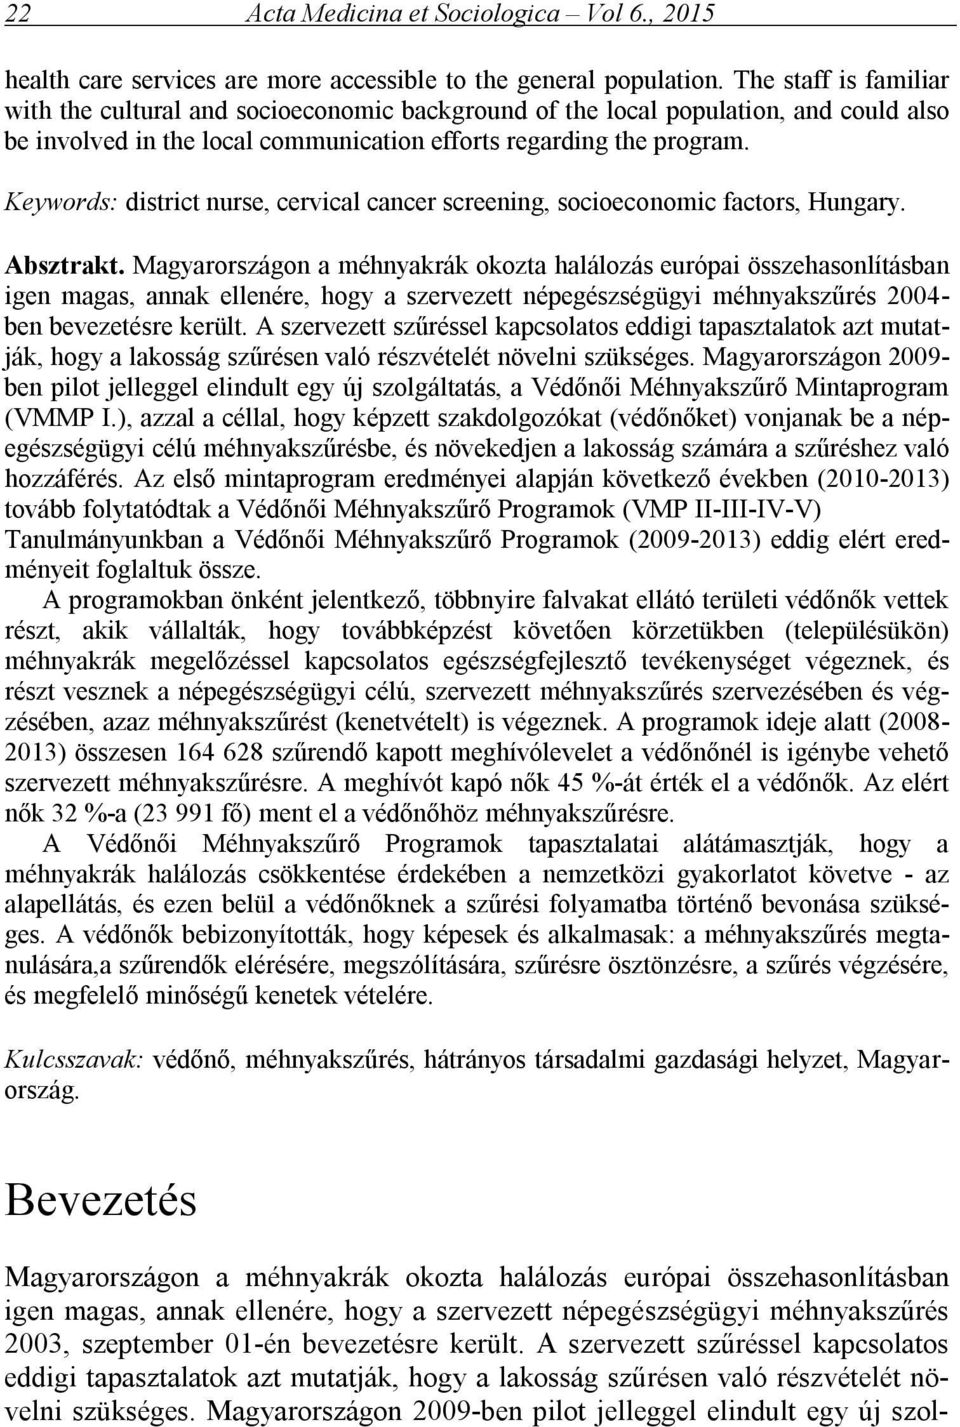 Keywords: district nurse, cervical cancer screening, socioeconomic factors, Hungary. Absztrakt.